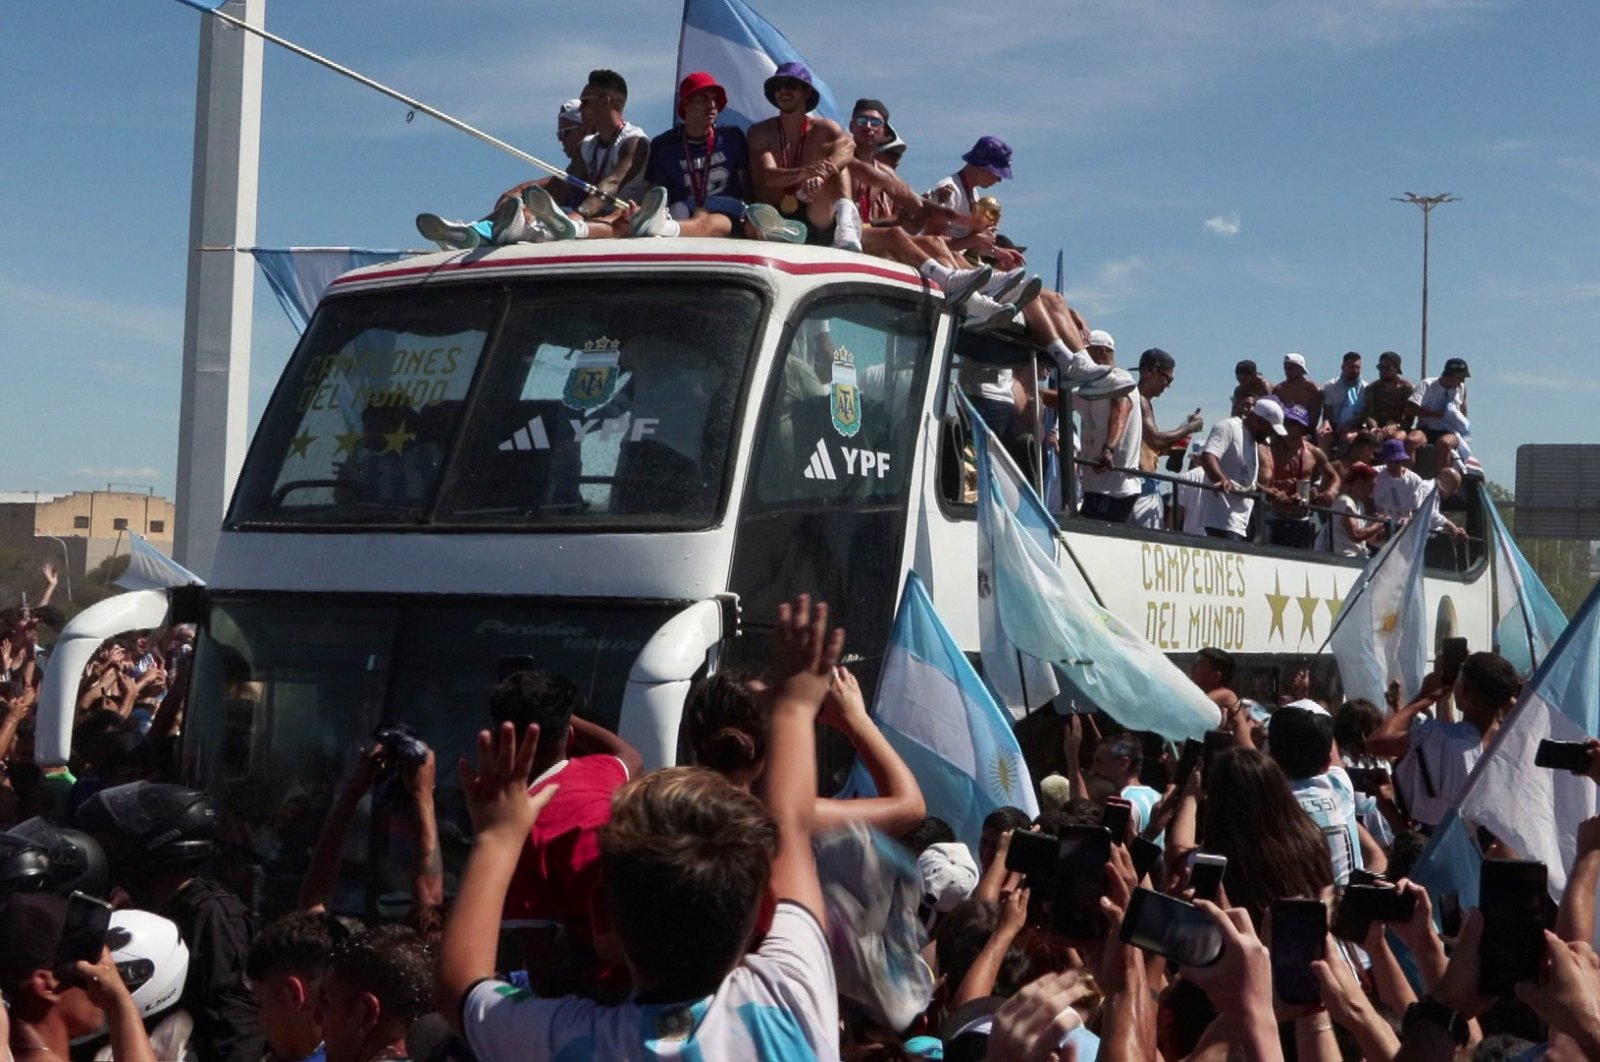 Gelombang kesuraman menyelimuti penonton Argentina saat parade tiba-tiba berakhir